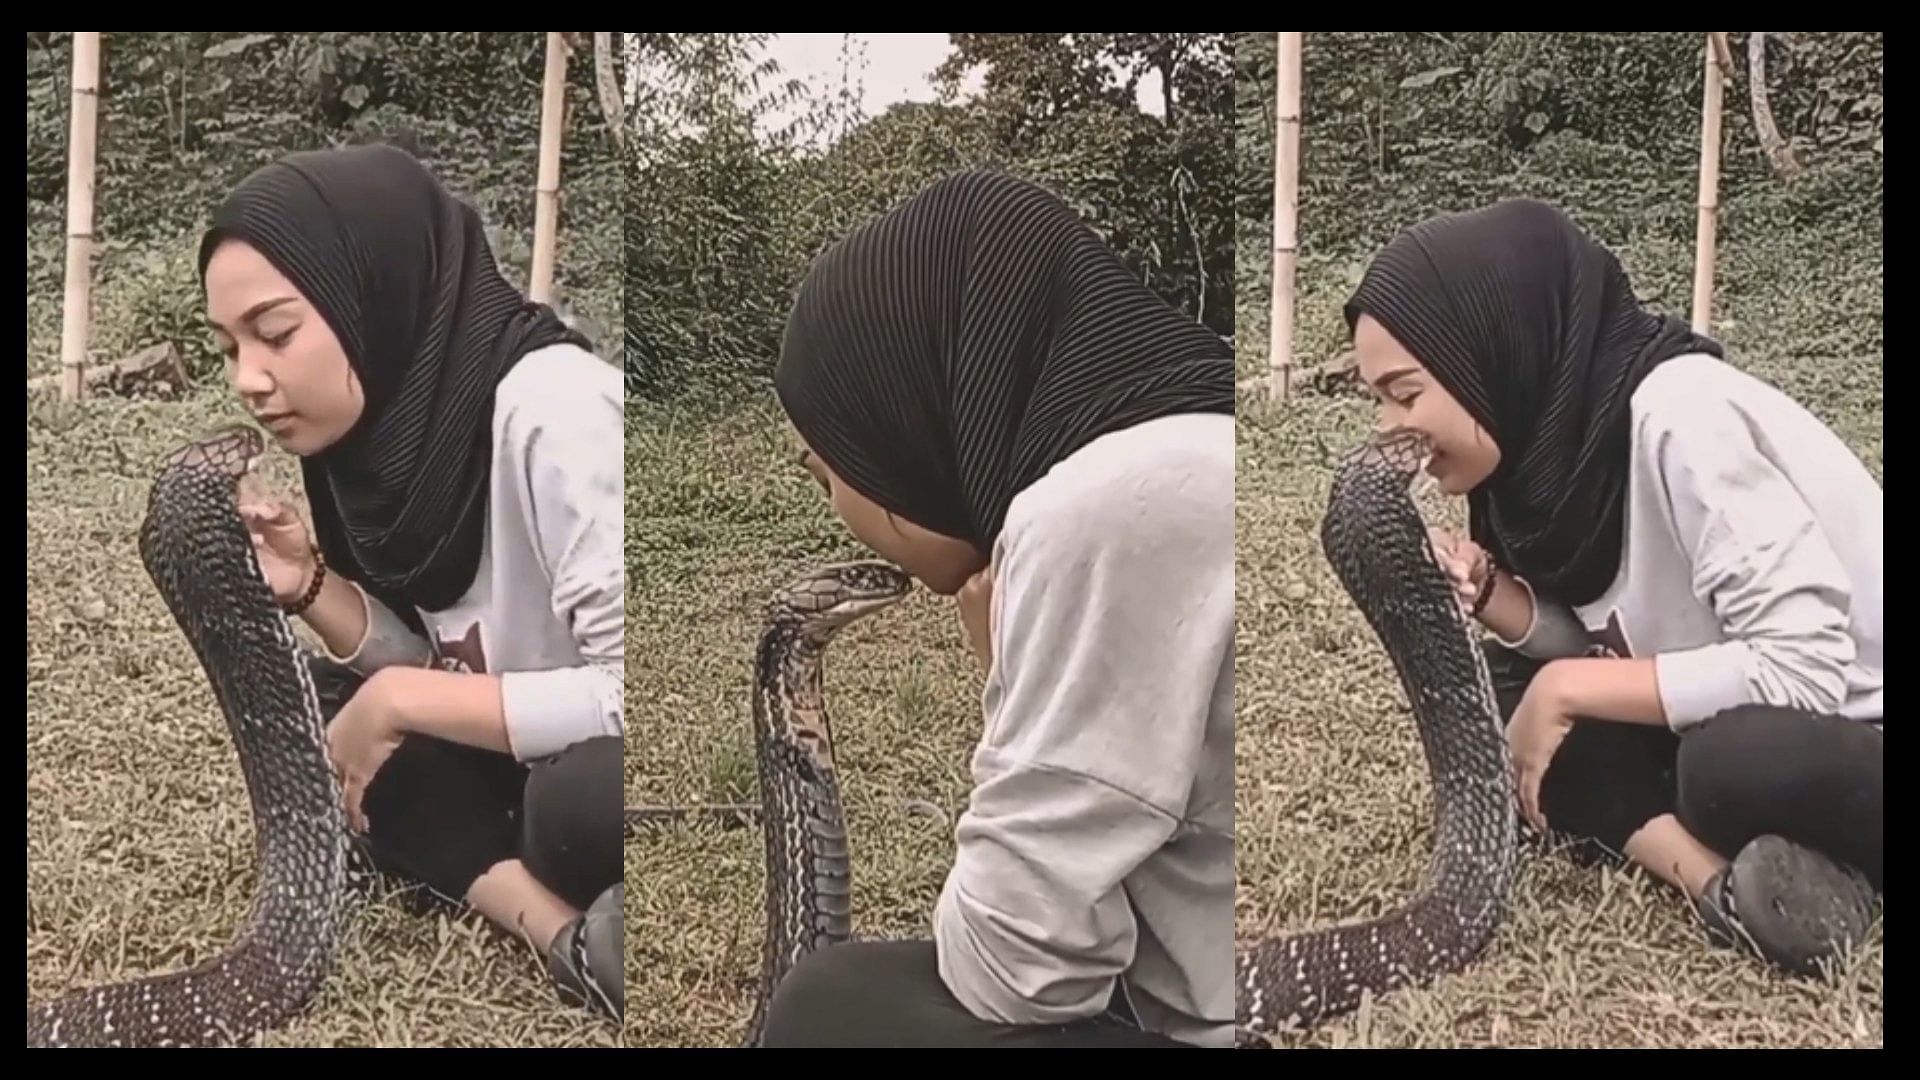 Girl seen kissing King Cobra people shocked video viral on social media